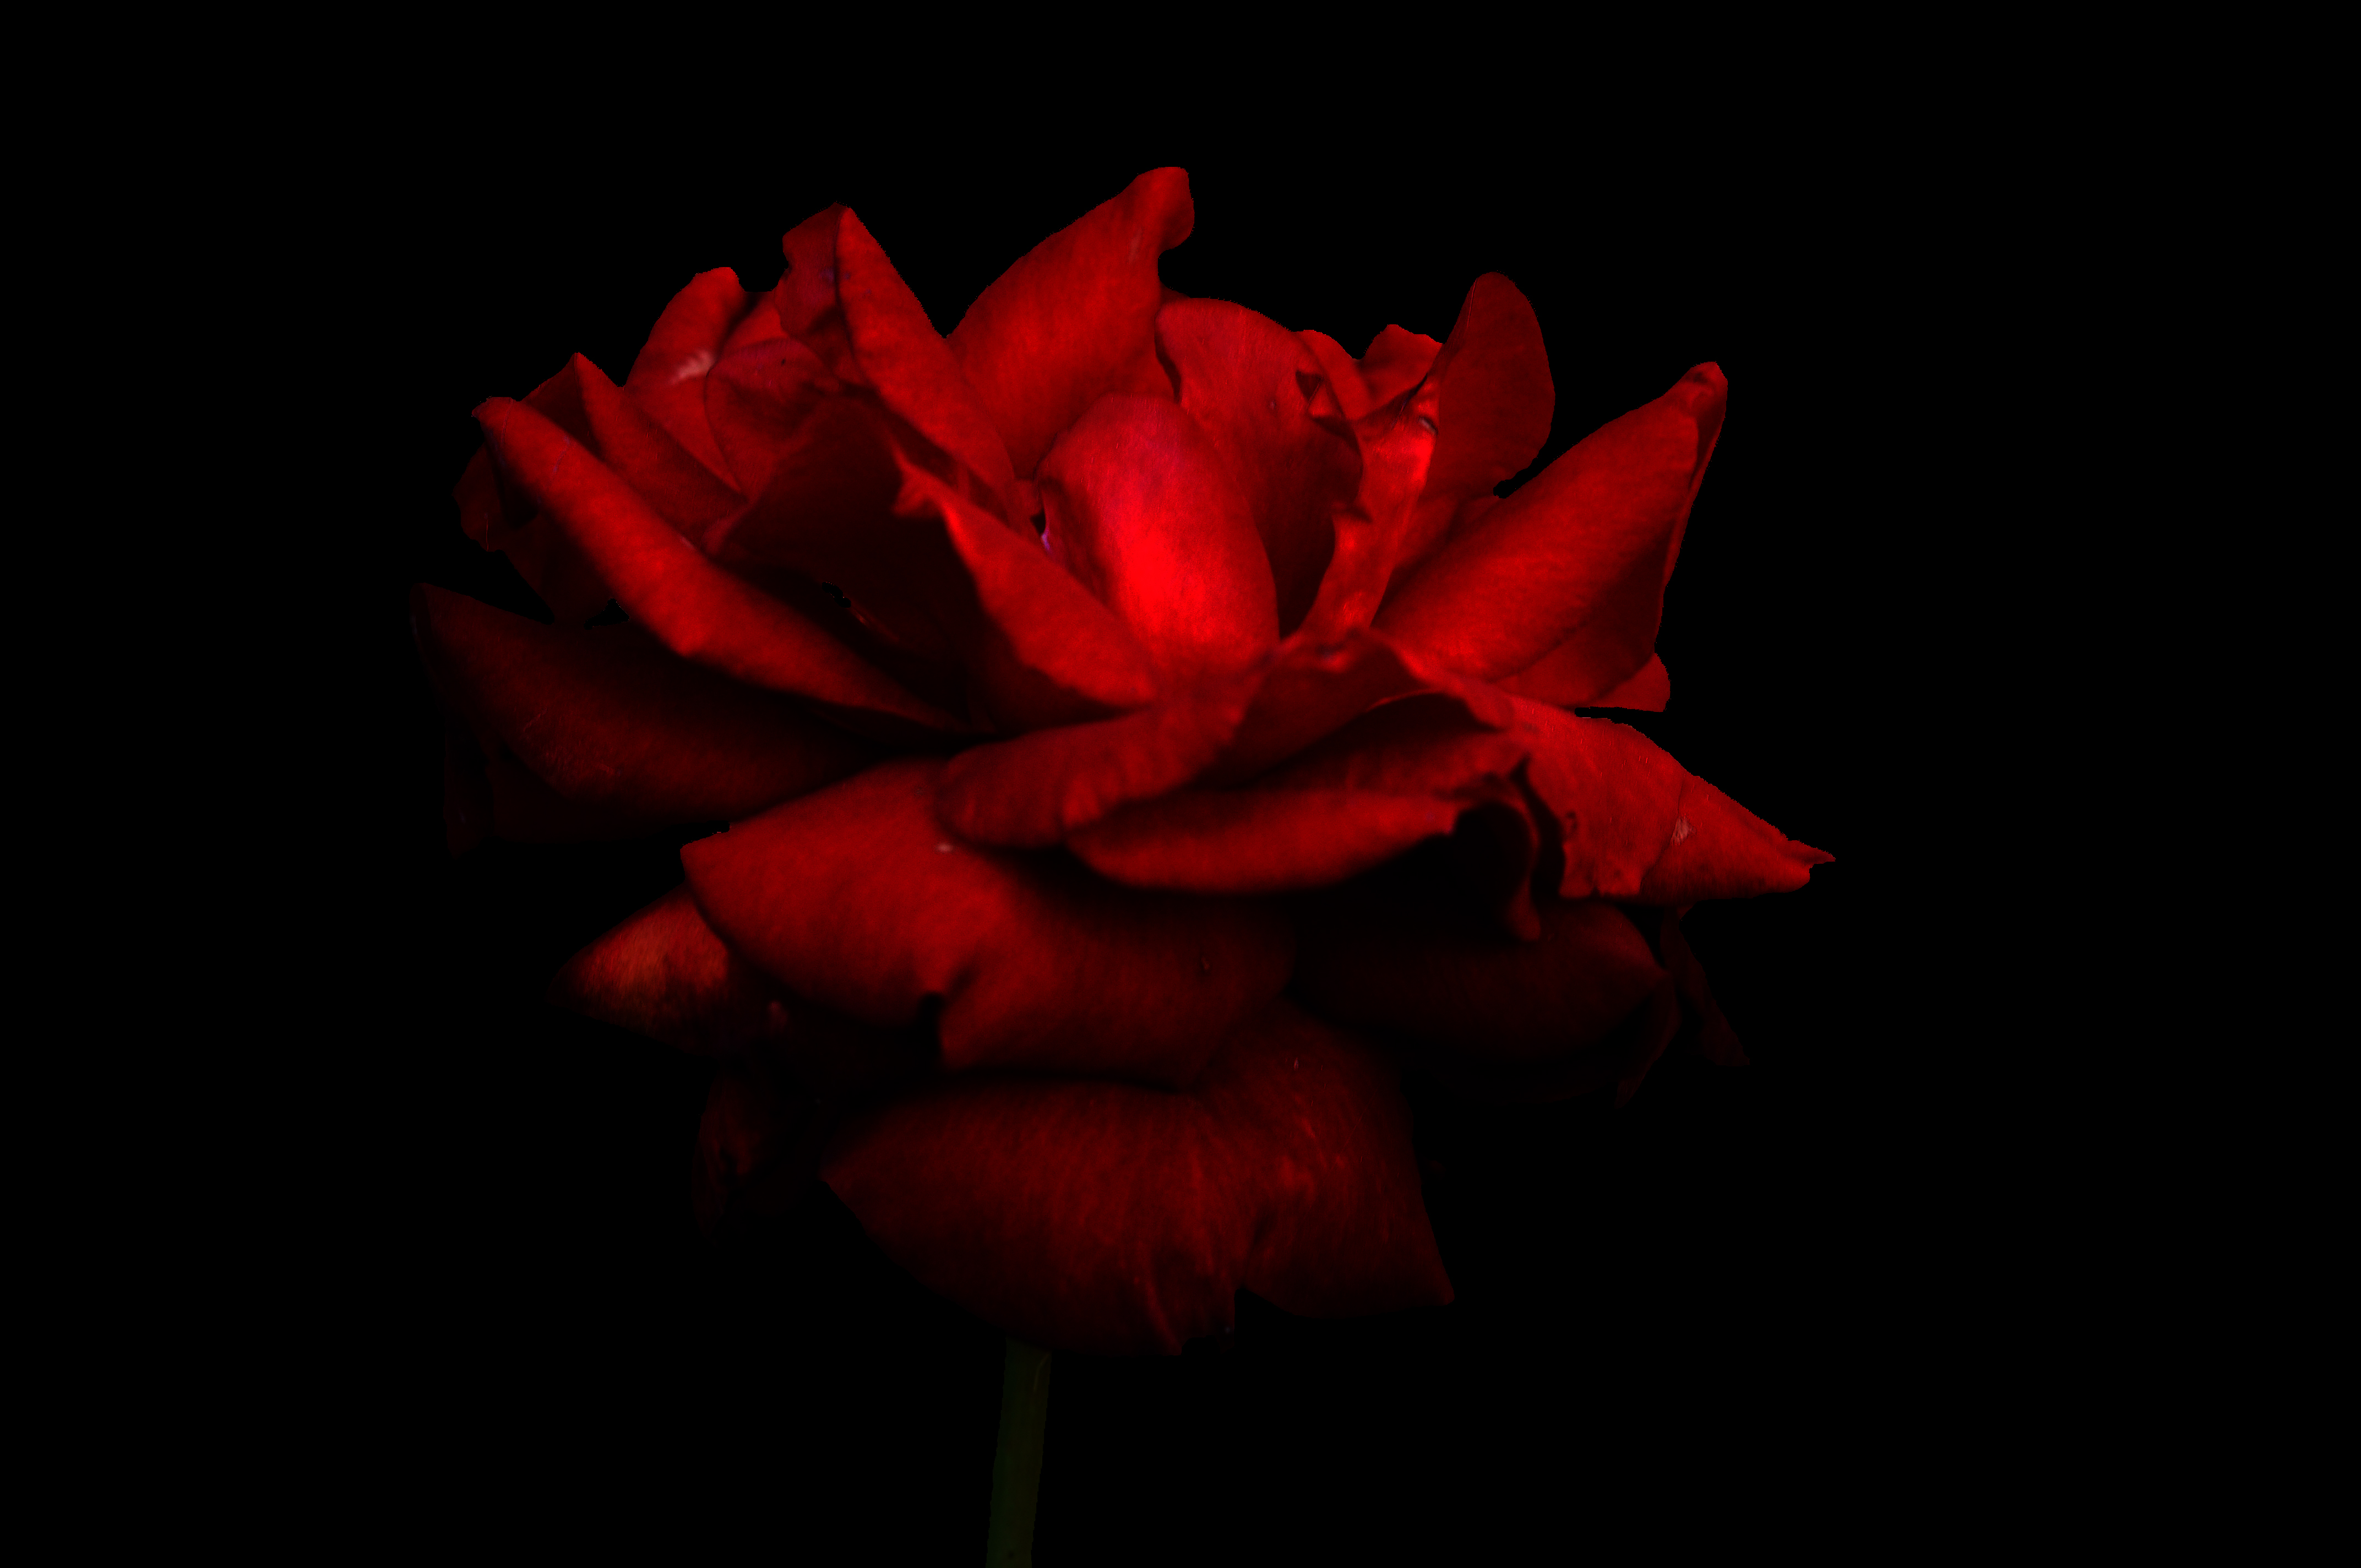 Dark Red Rose Image Imageexplore